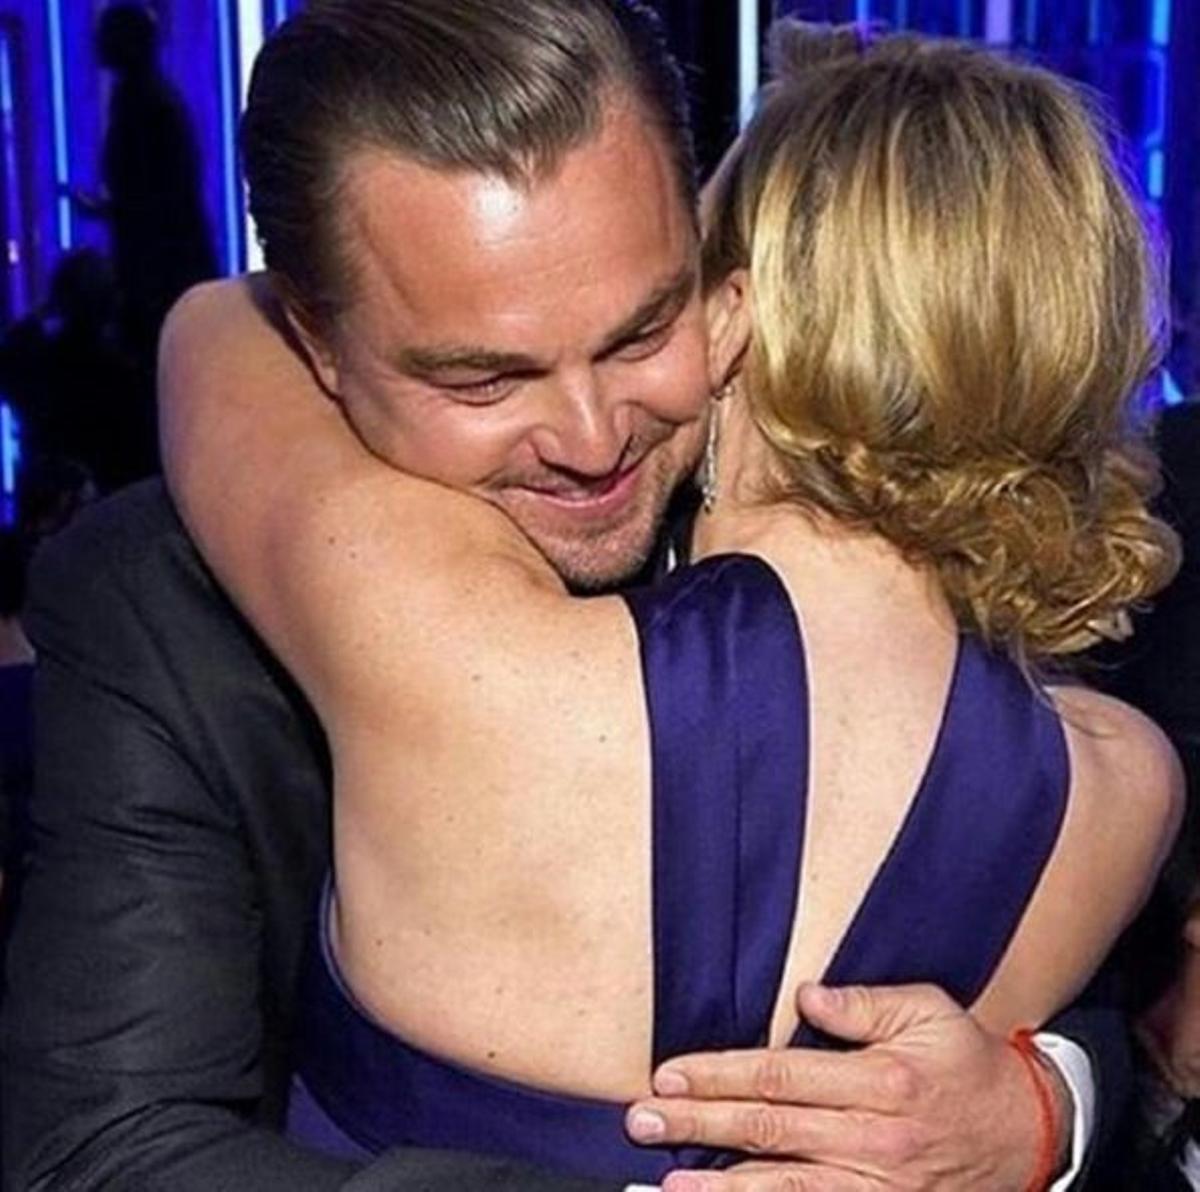 #GlobosdeOro en Instagram, Leonardo DiCaprio y Kate Winslet